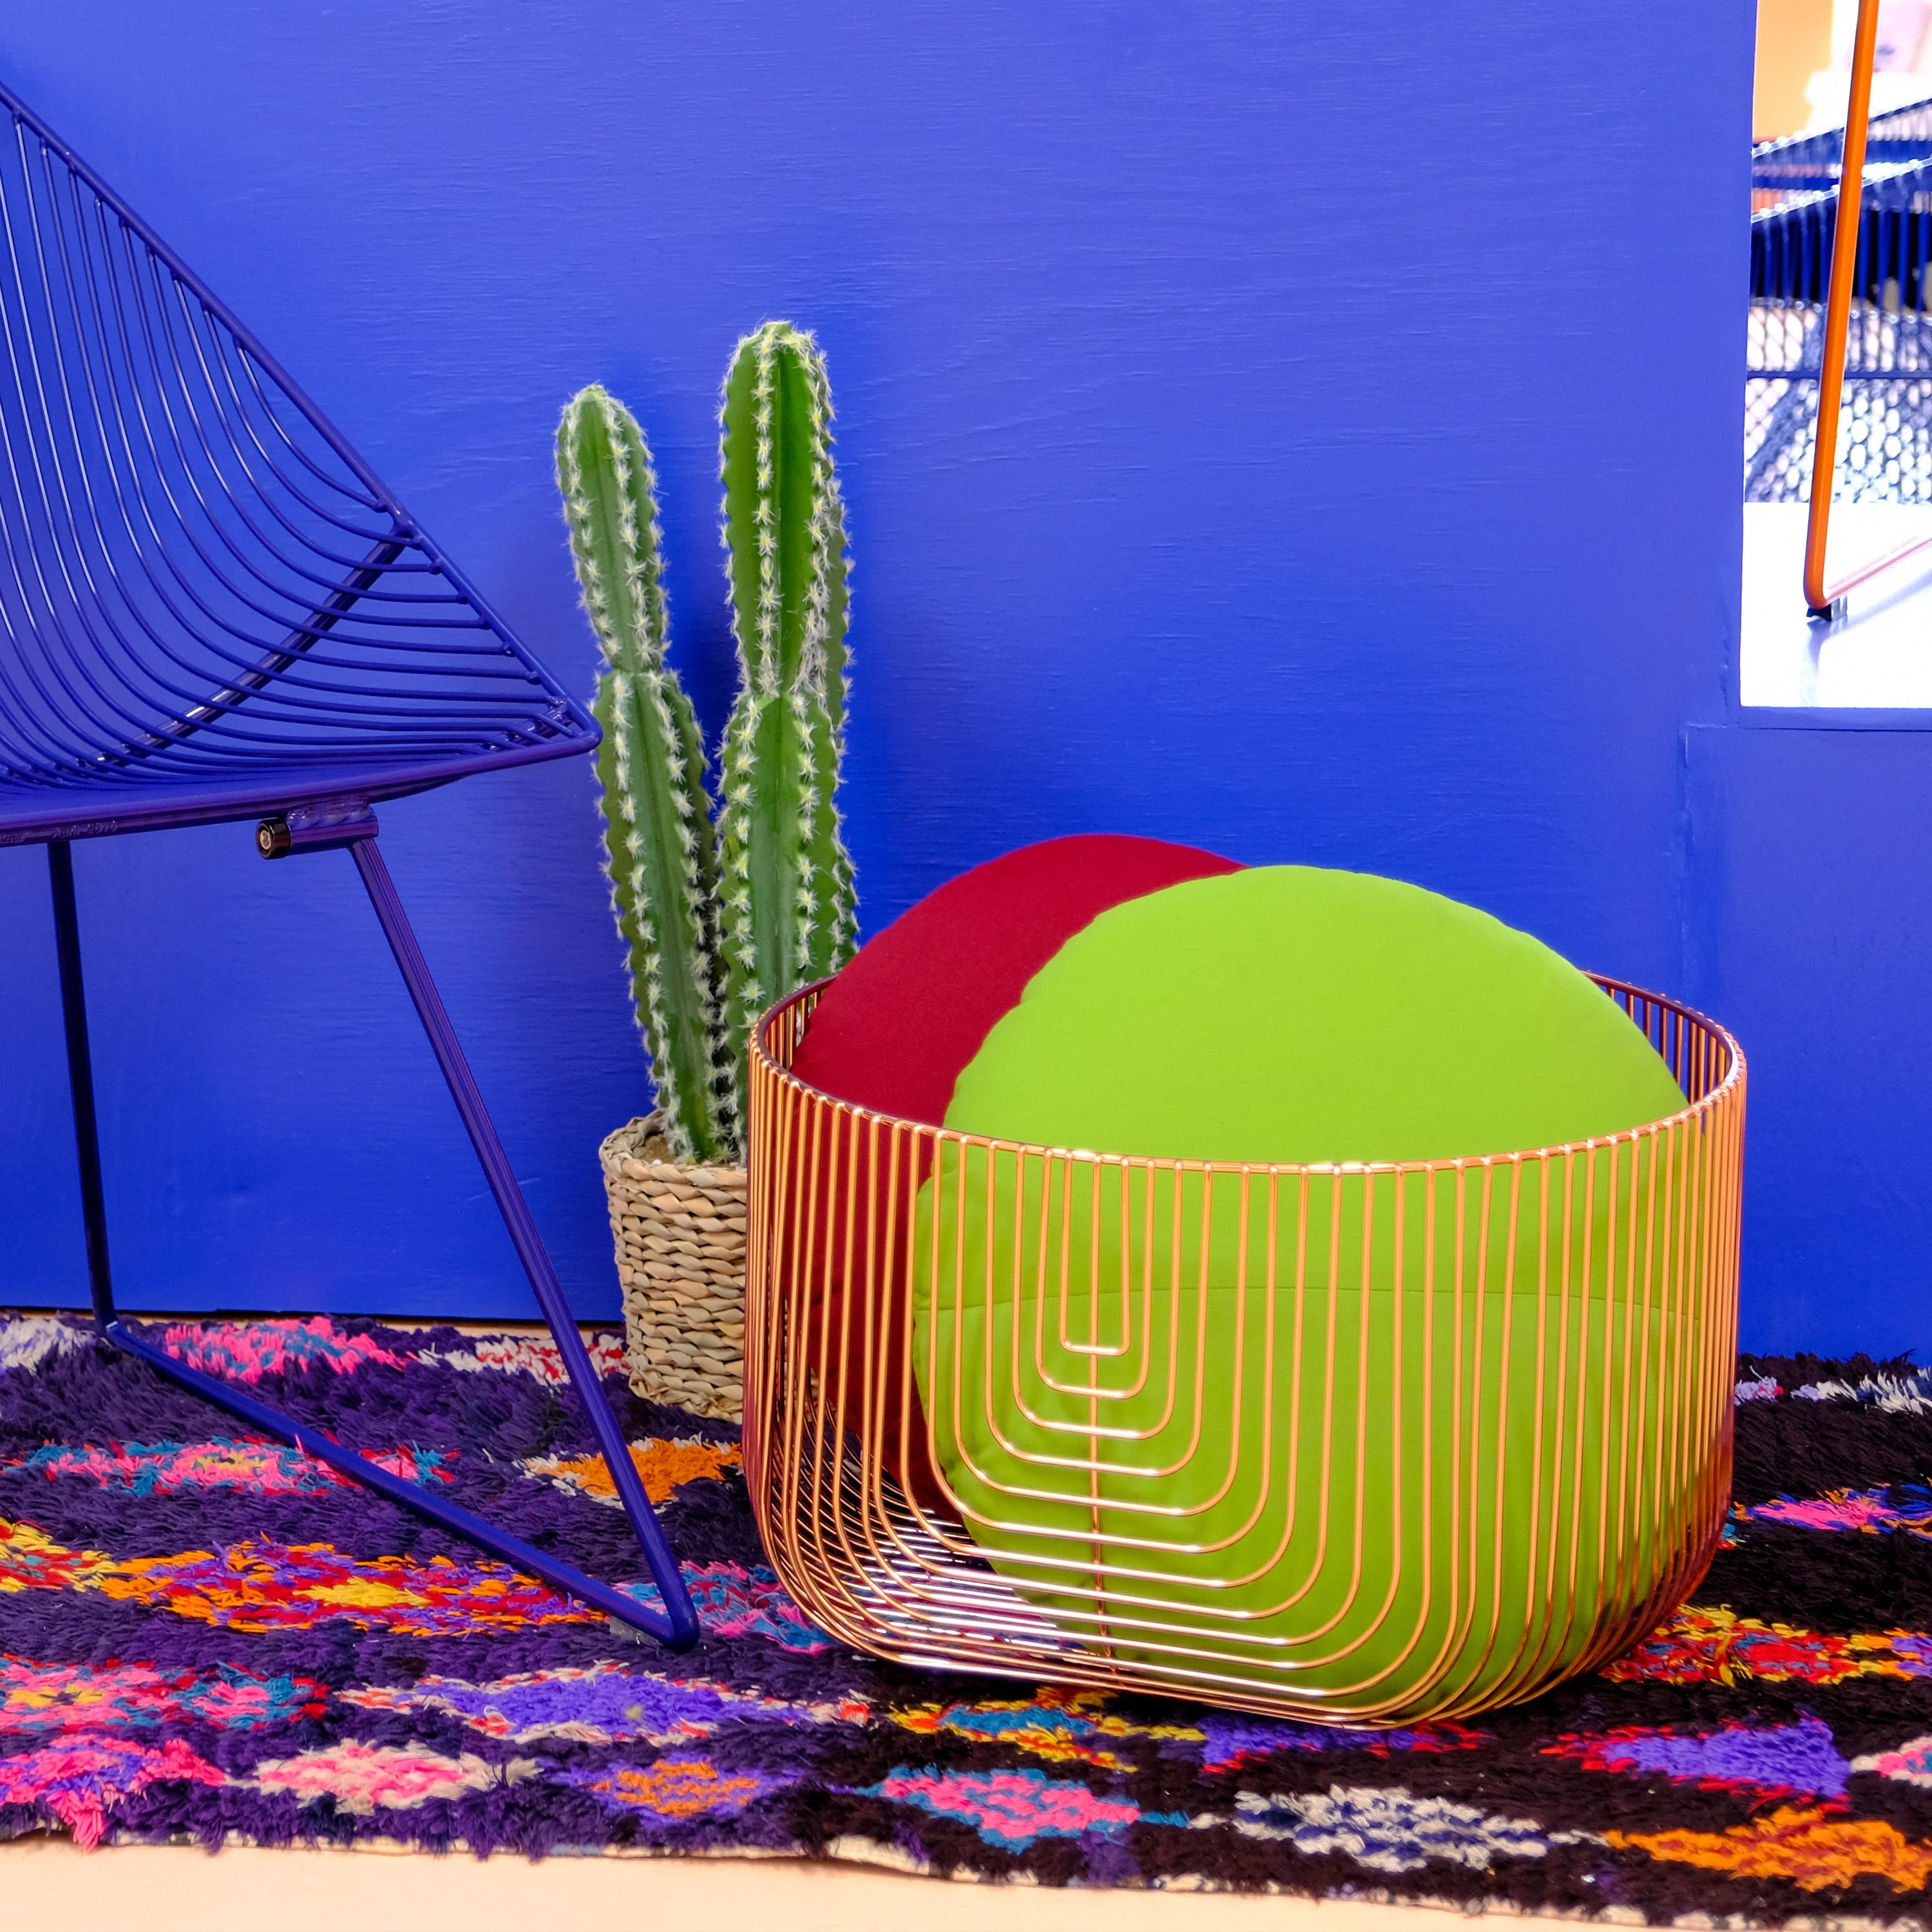 Modern Medium Sized Basket, Wire Basket Design by Bend Goods, Copper